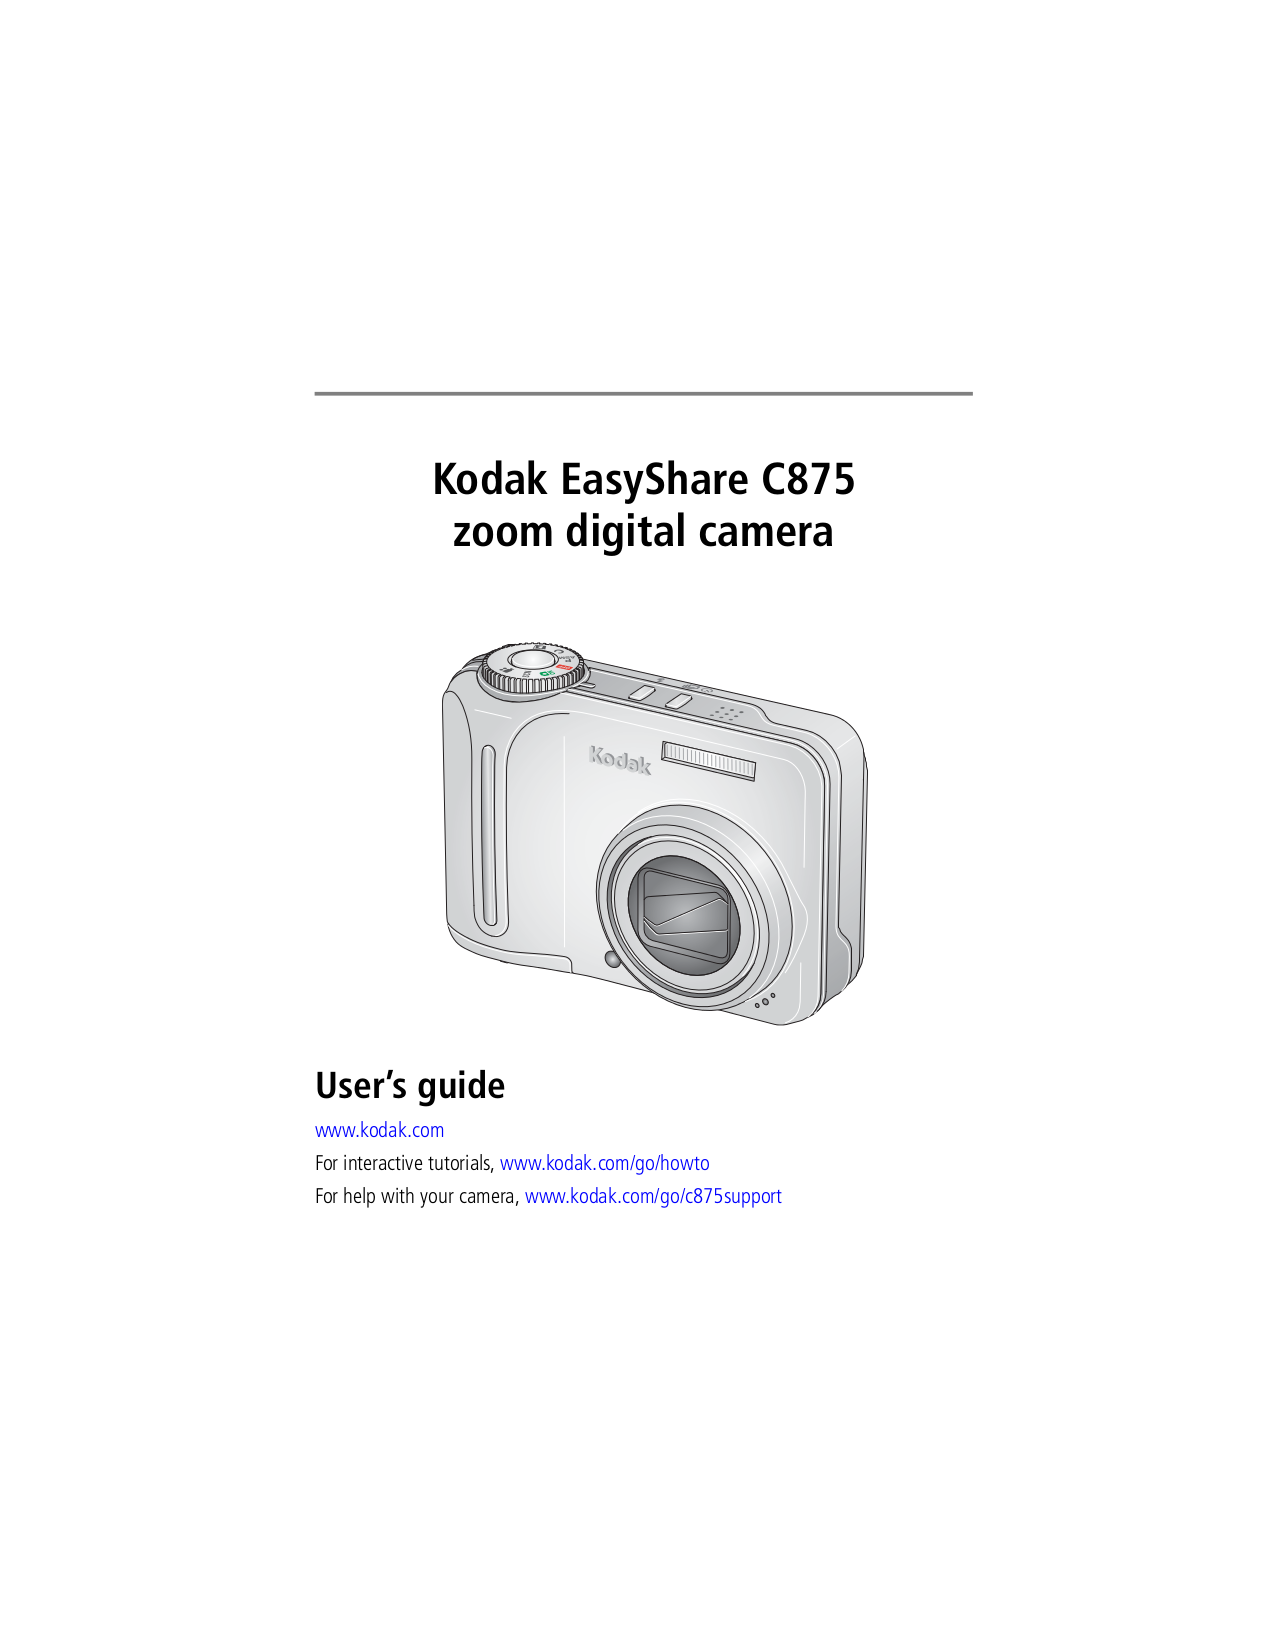 Kodak easyshare camera software, free download windows 10